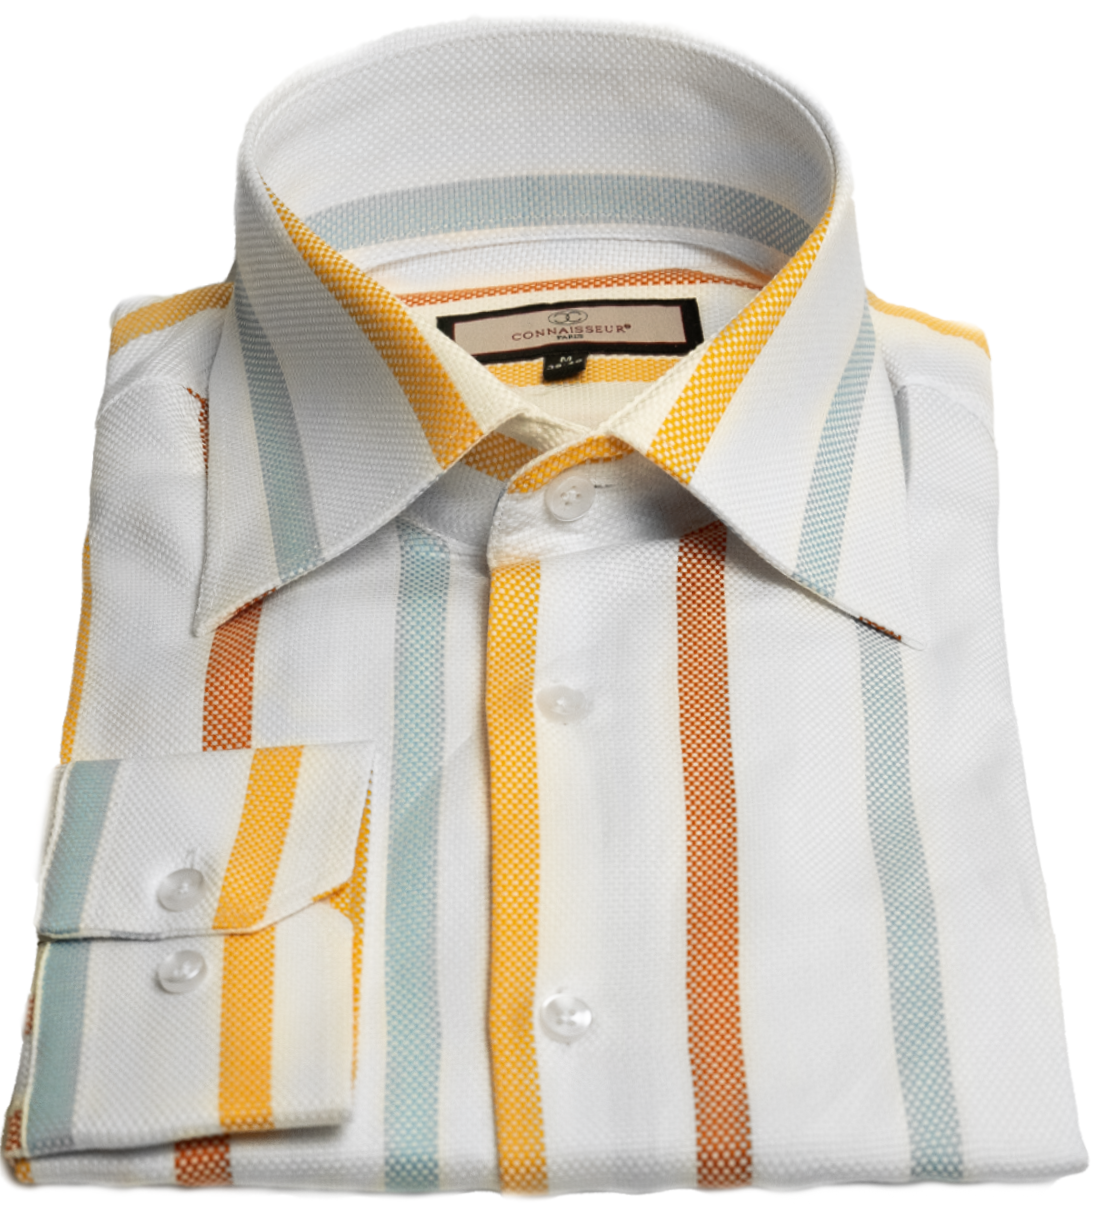 Connaisseur - White with yellow, orange and blue plaid slim fit dress shirt